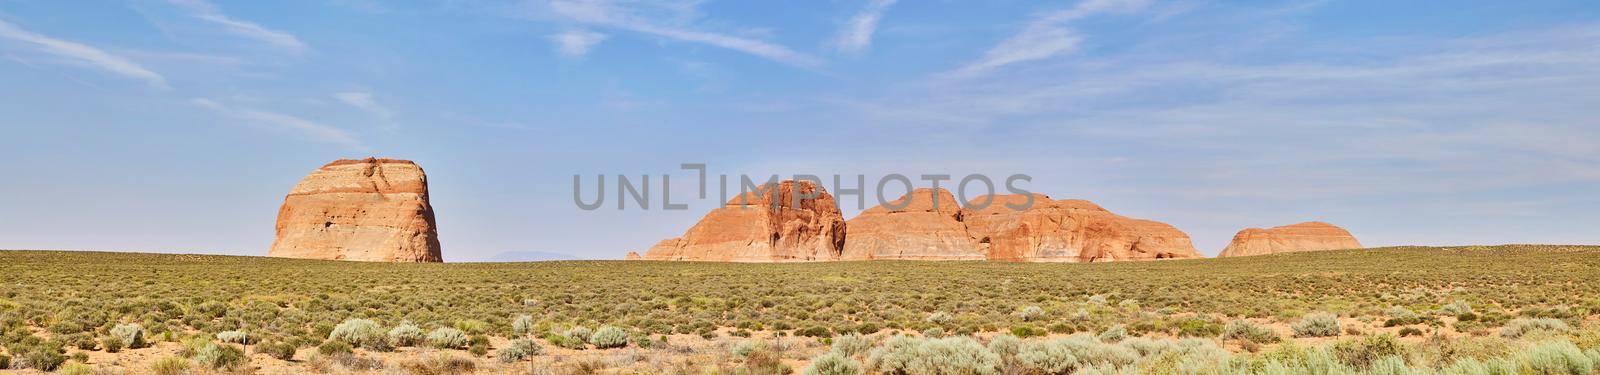 Panorama of red rock pillars on desert horizon by njproductions